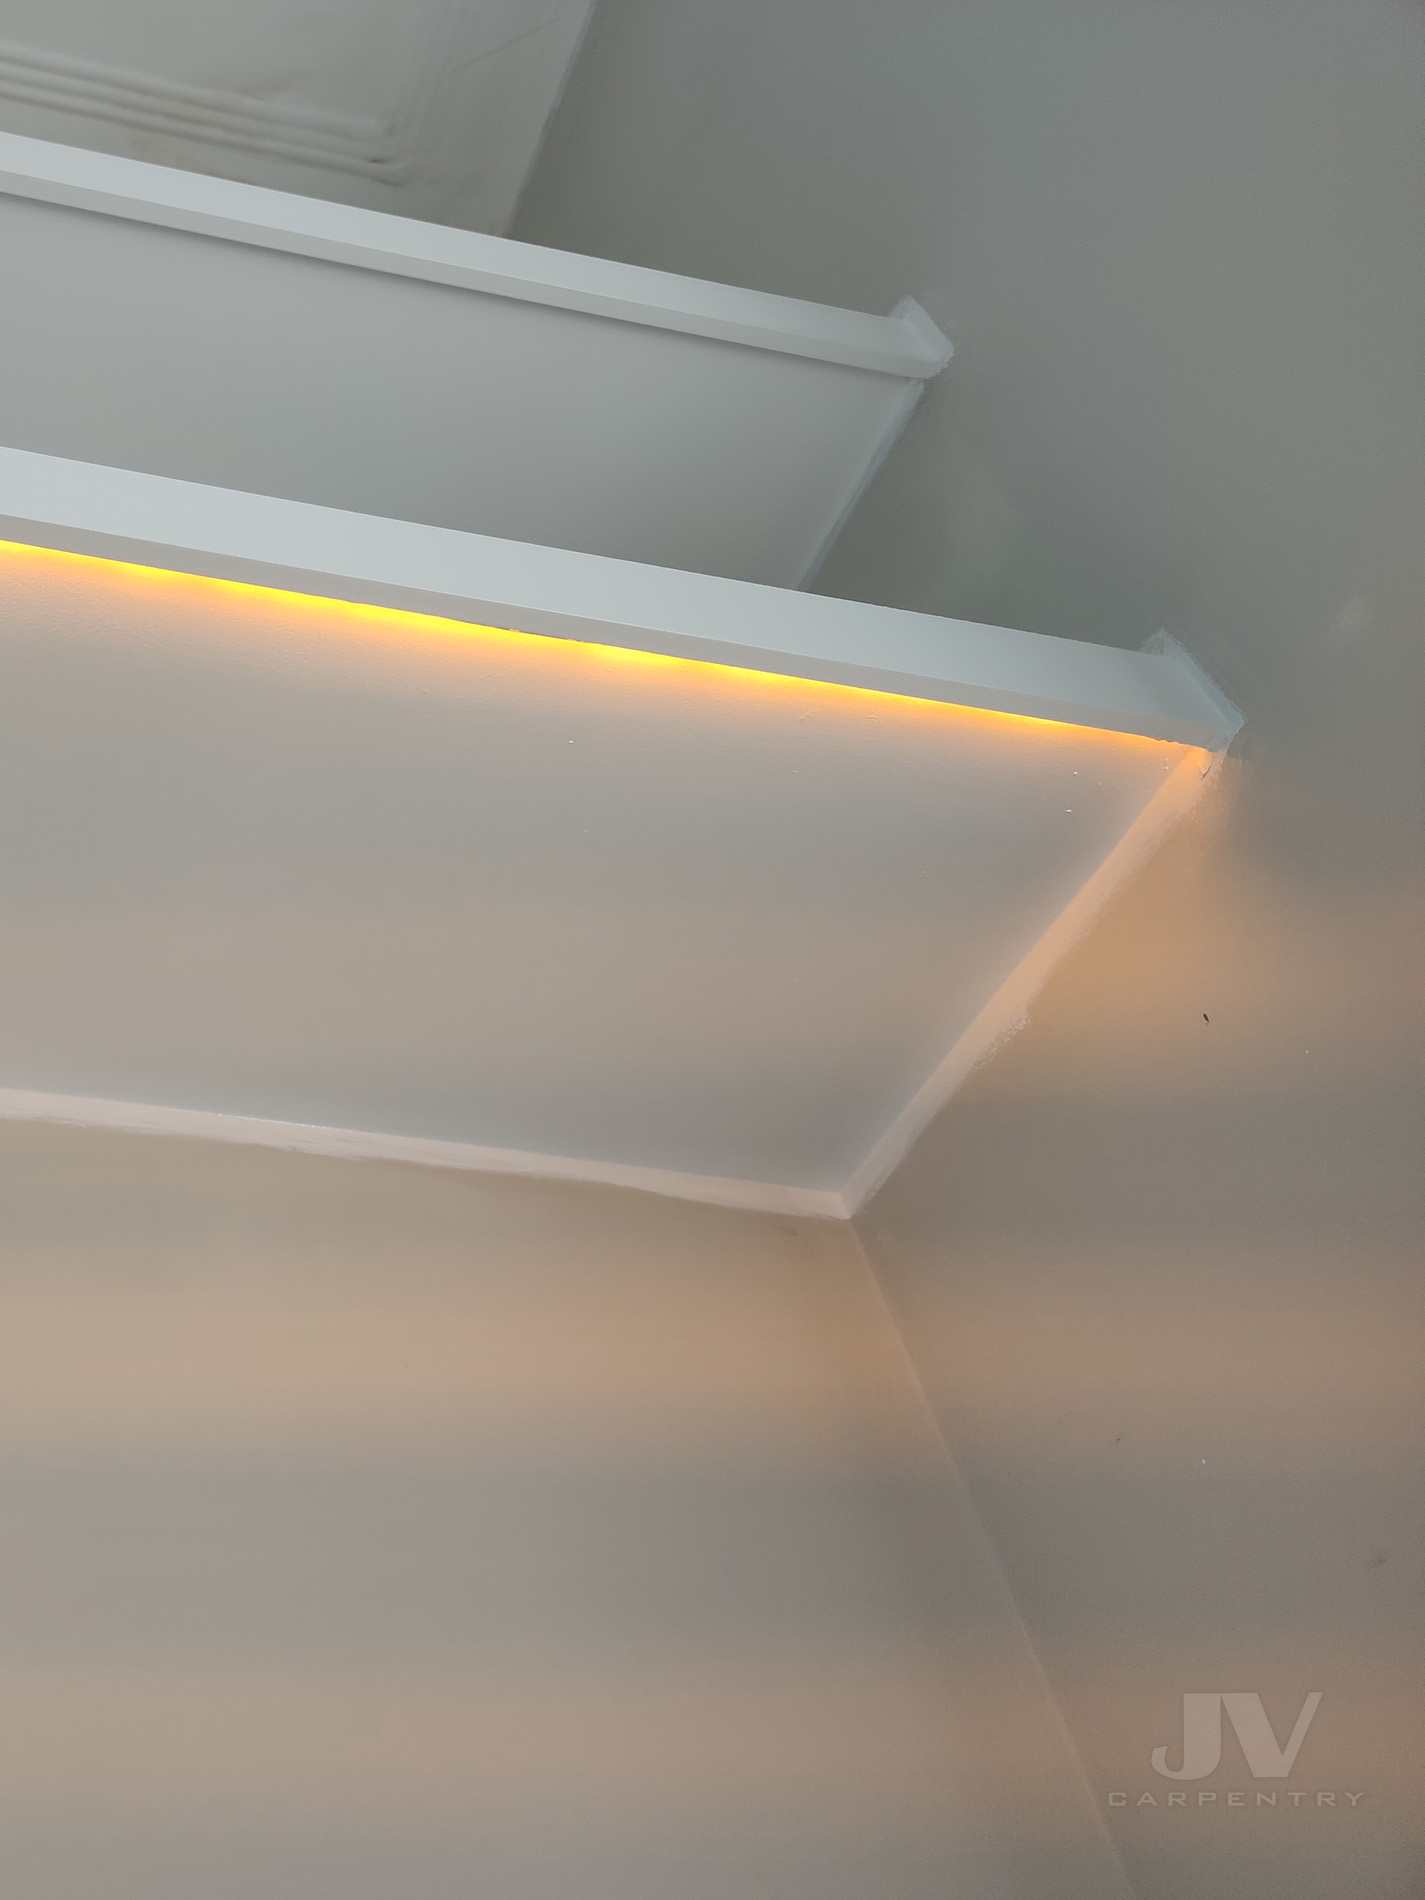 led light underneath floating shelf in alcove